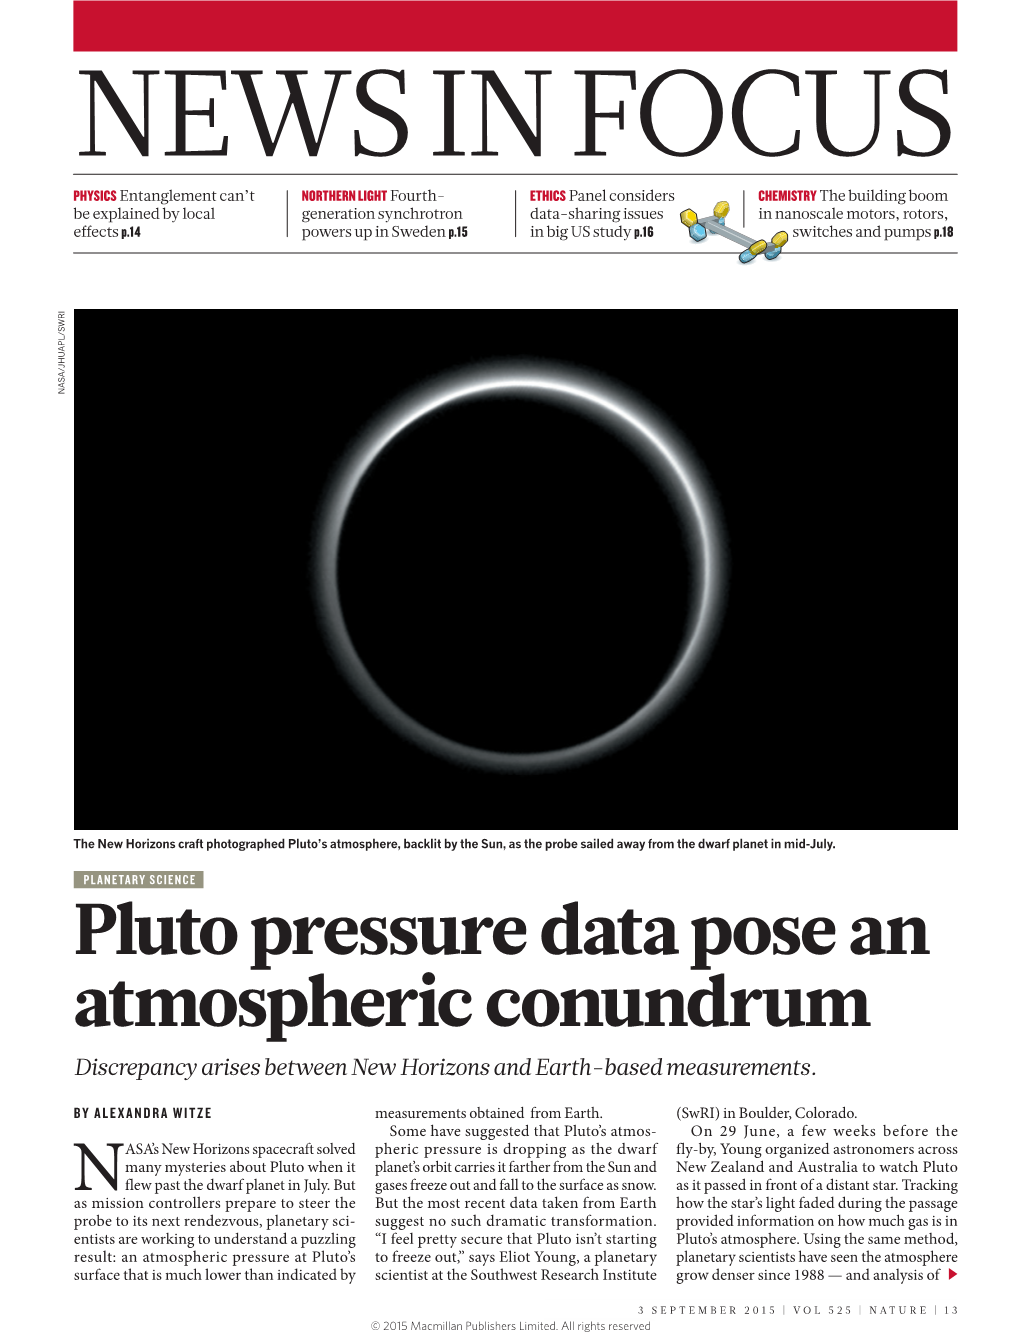 Pluto Pressure Data Pose an Atmospheric Conundrum Discrepancy Arises Between New Horizons and Earth-Based Measurements